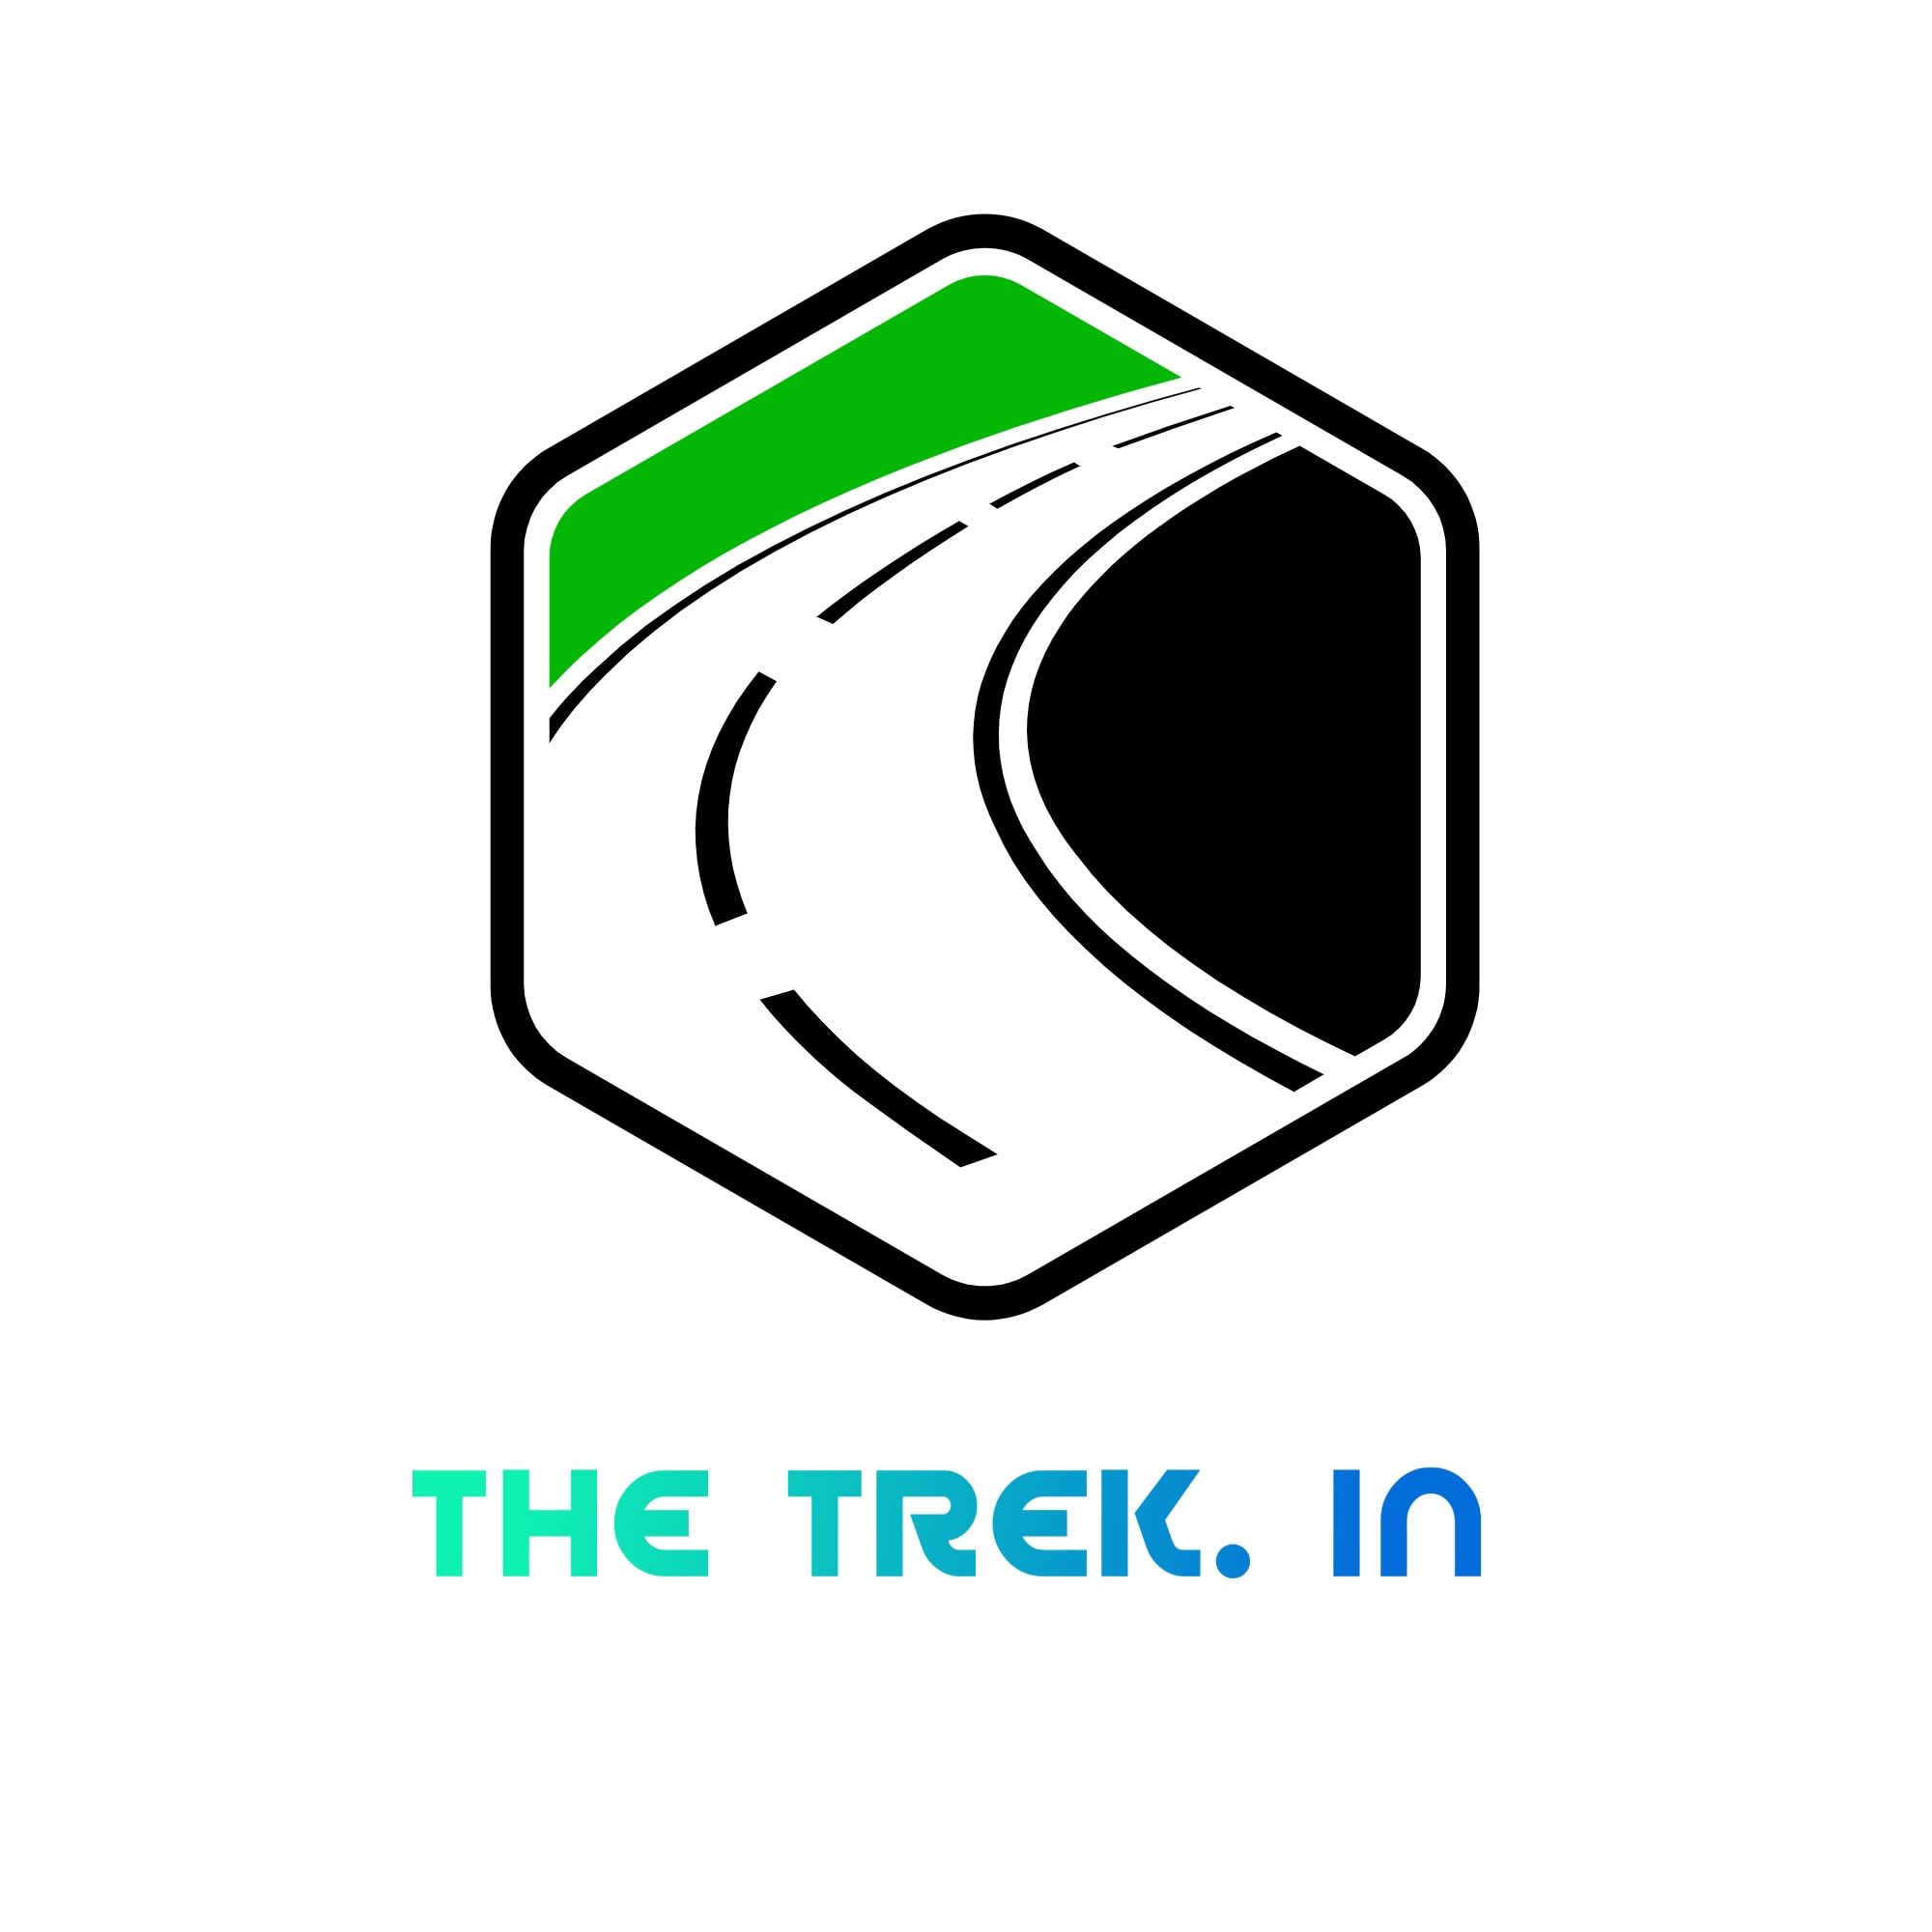 The Trek